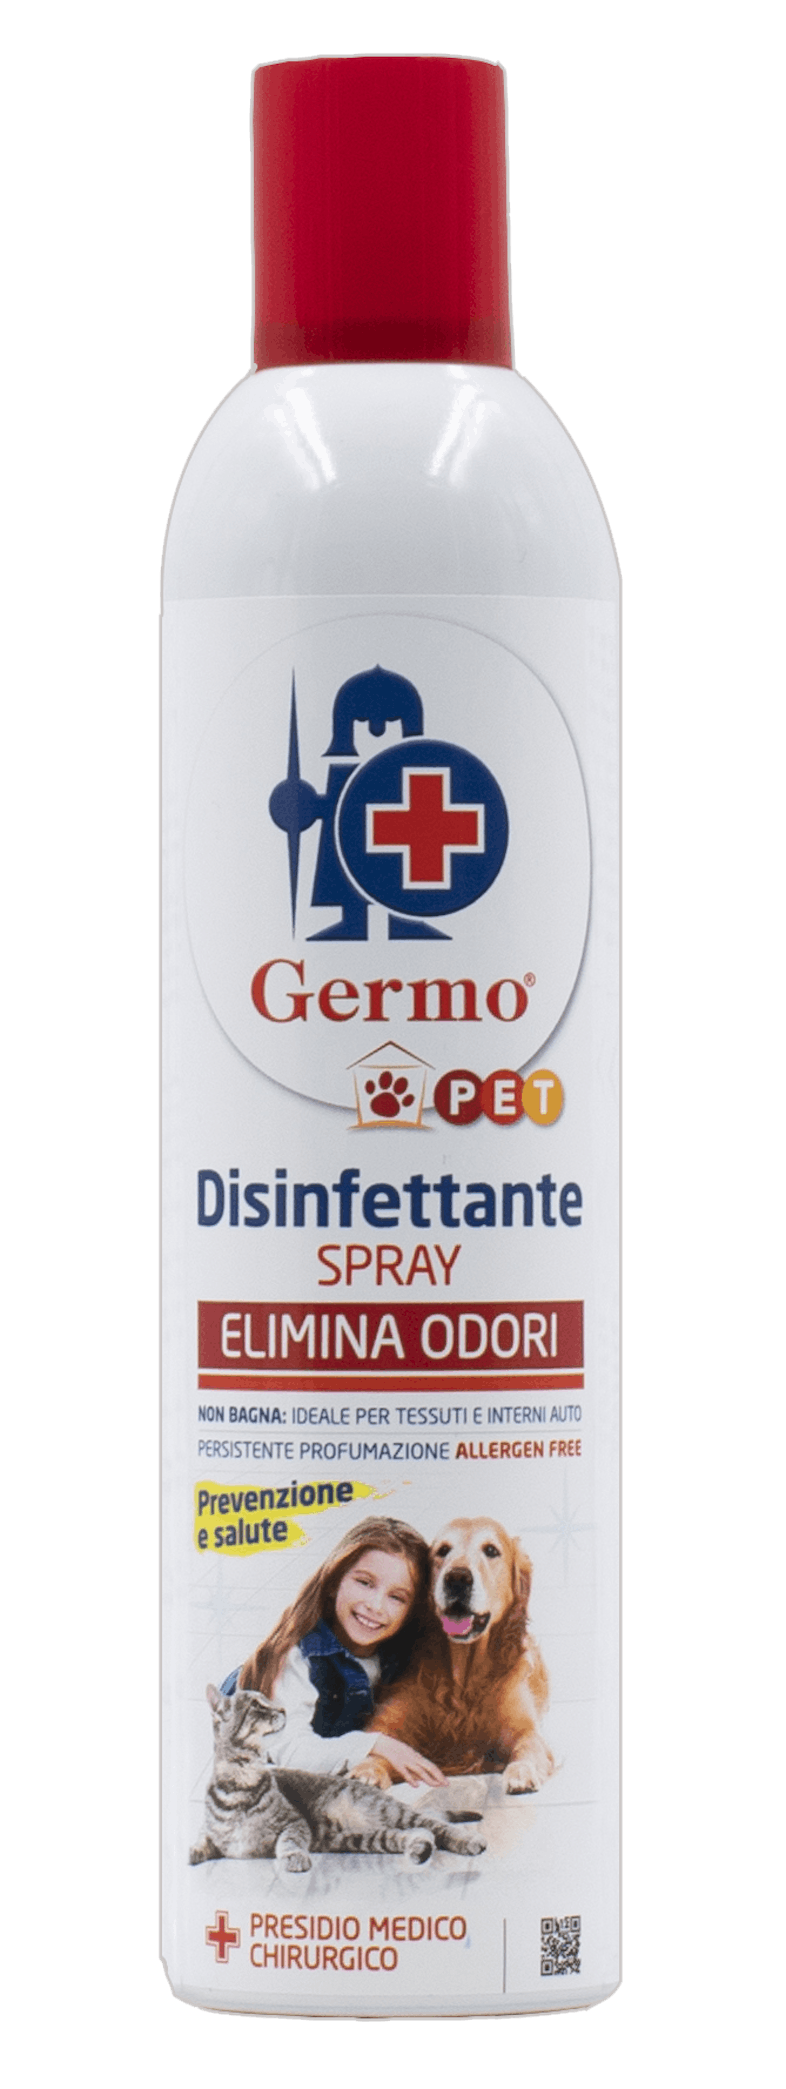 Pet Disinfettante Spray Elimina Odori 400ml